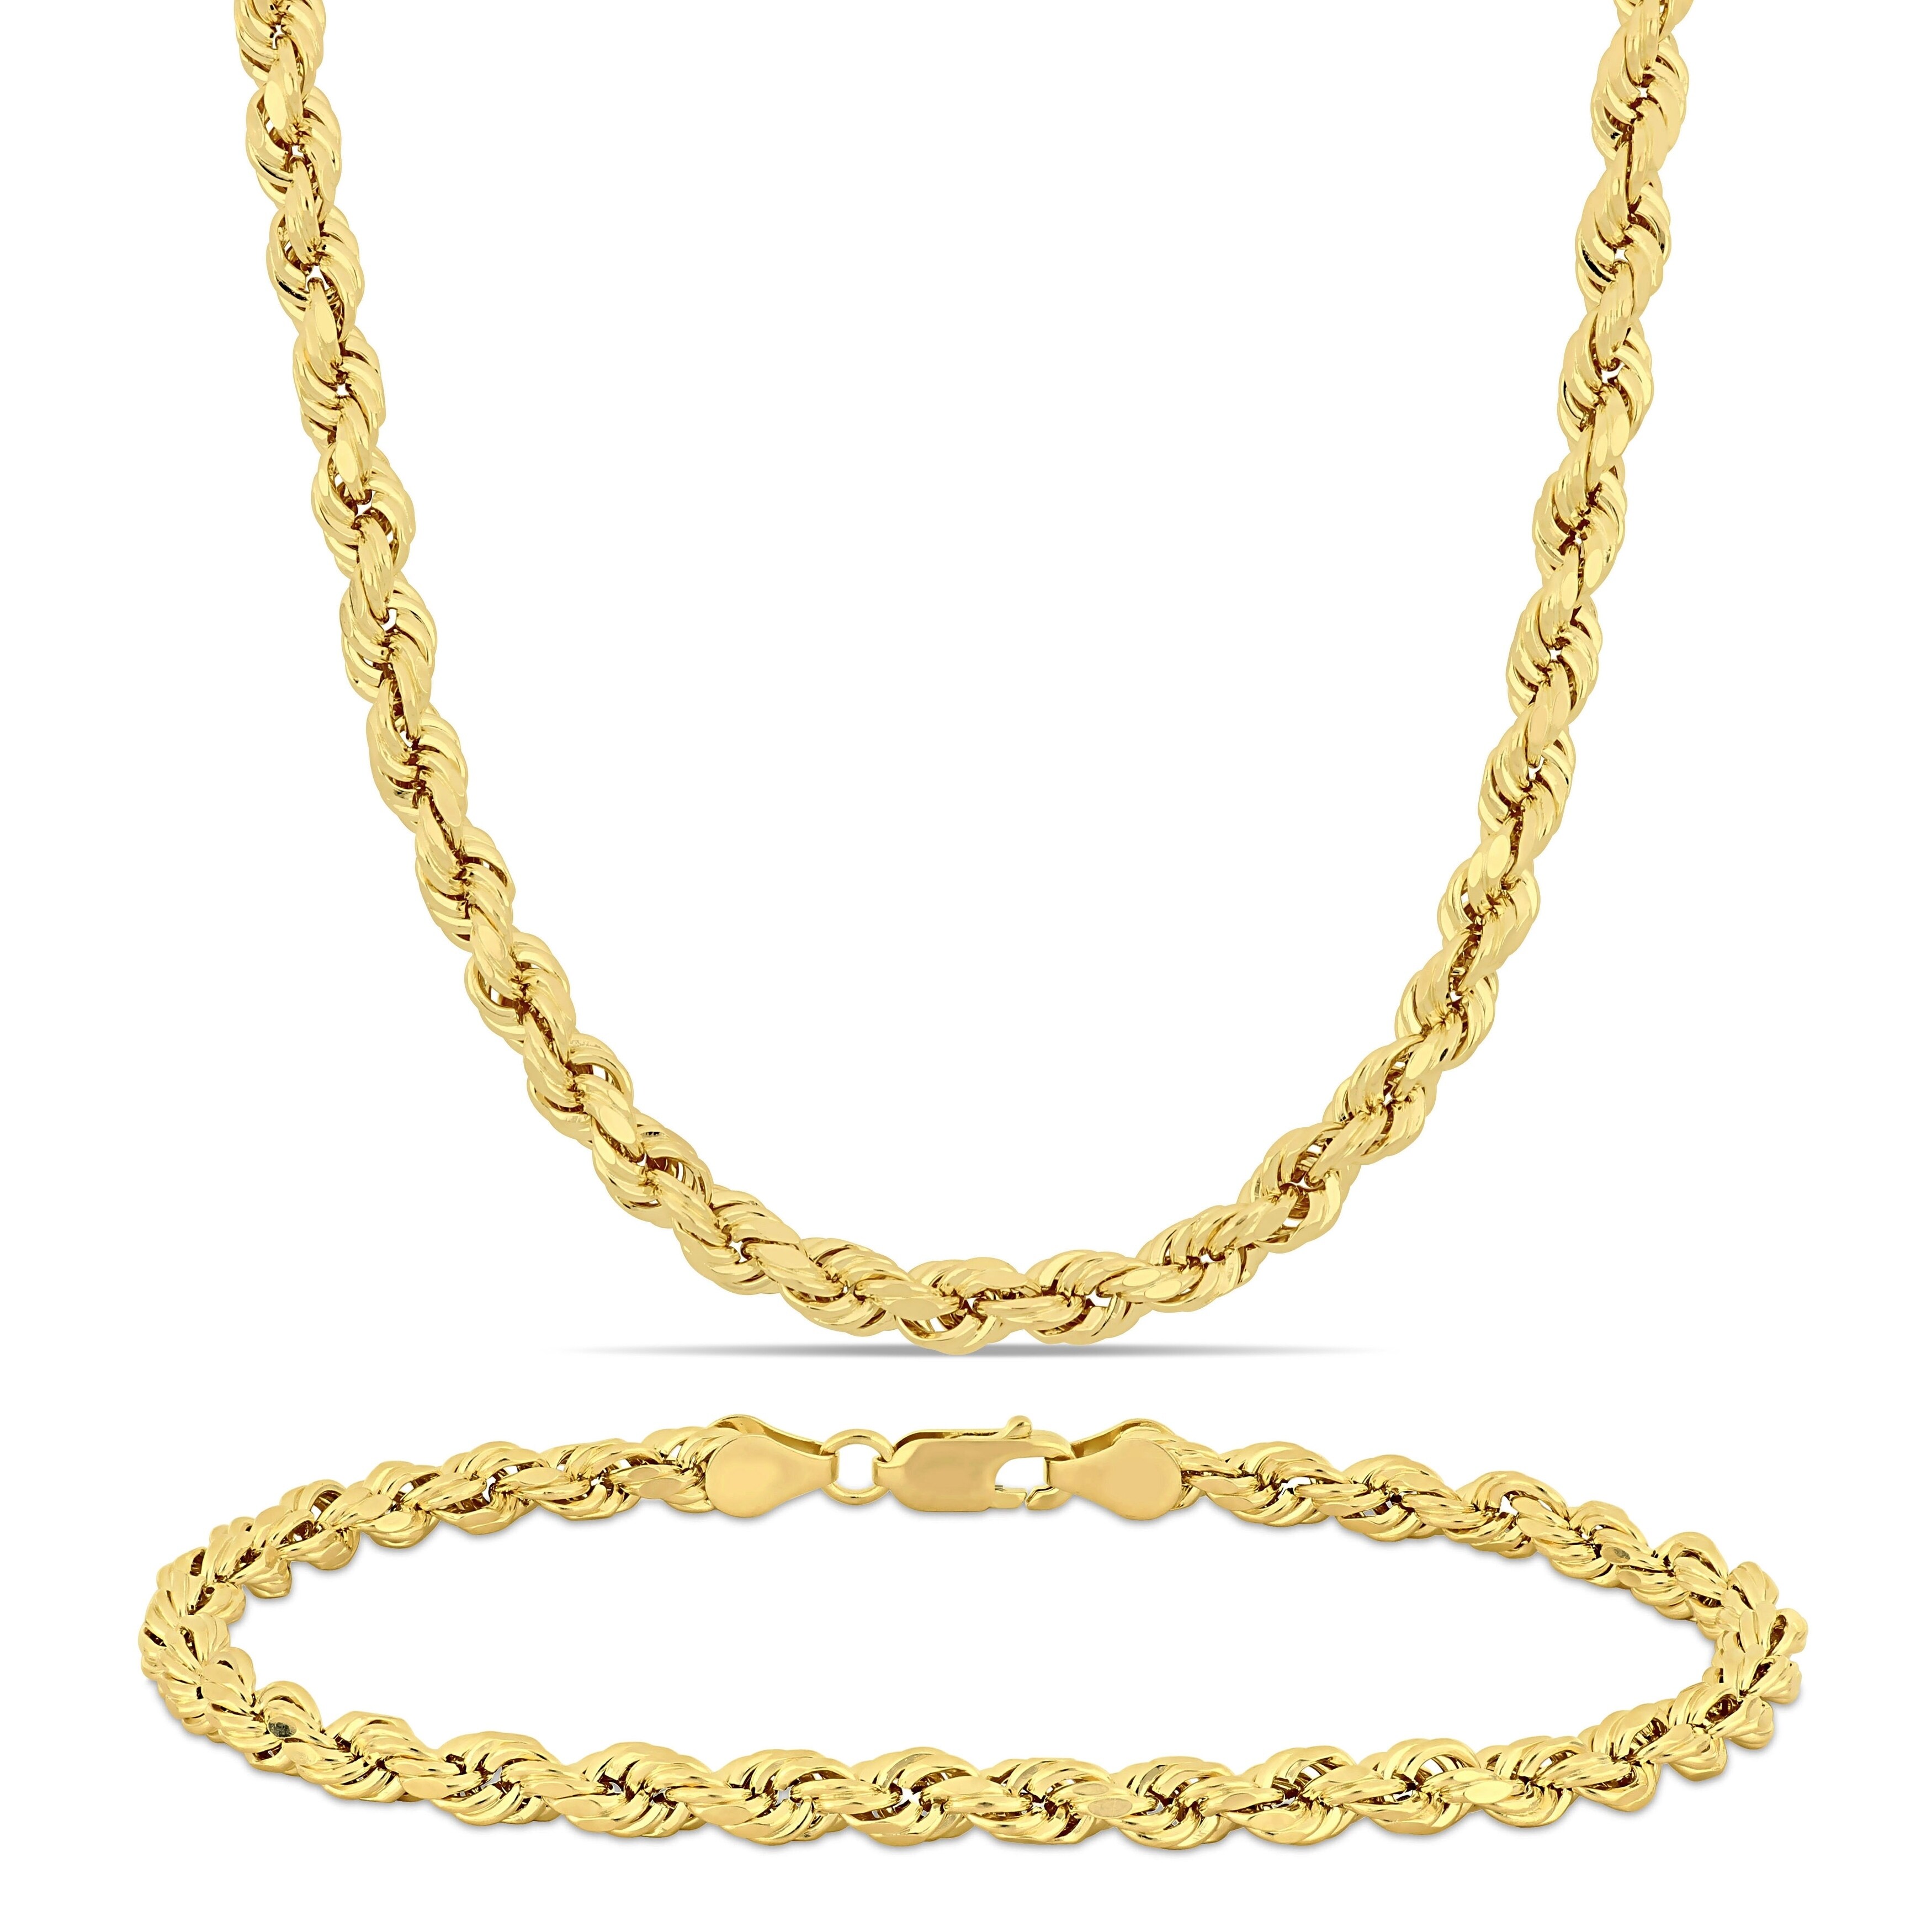 10k Solid Gold Rope Chain - The Best Original Gemstone